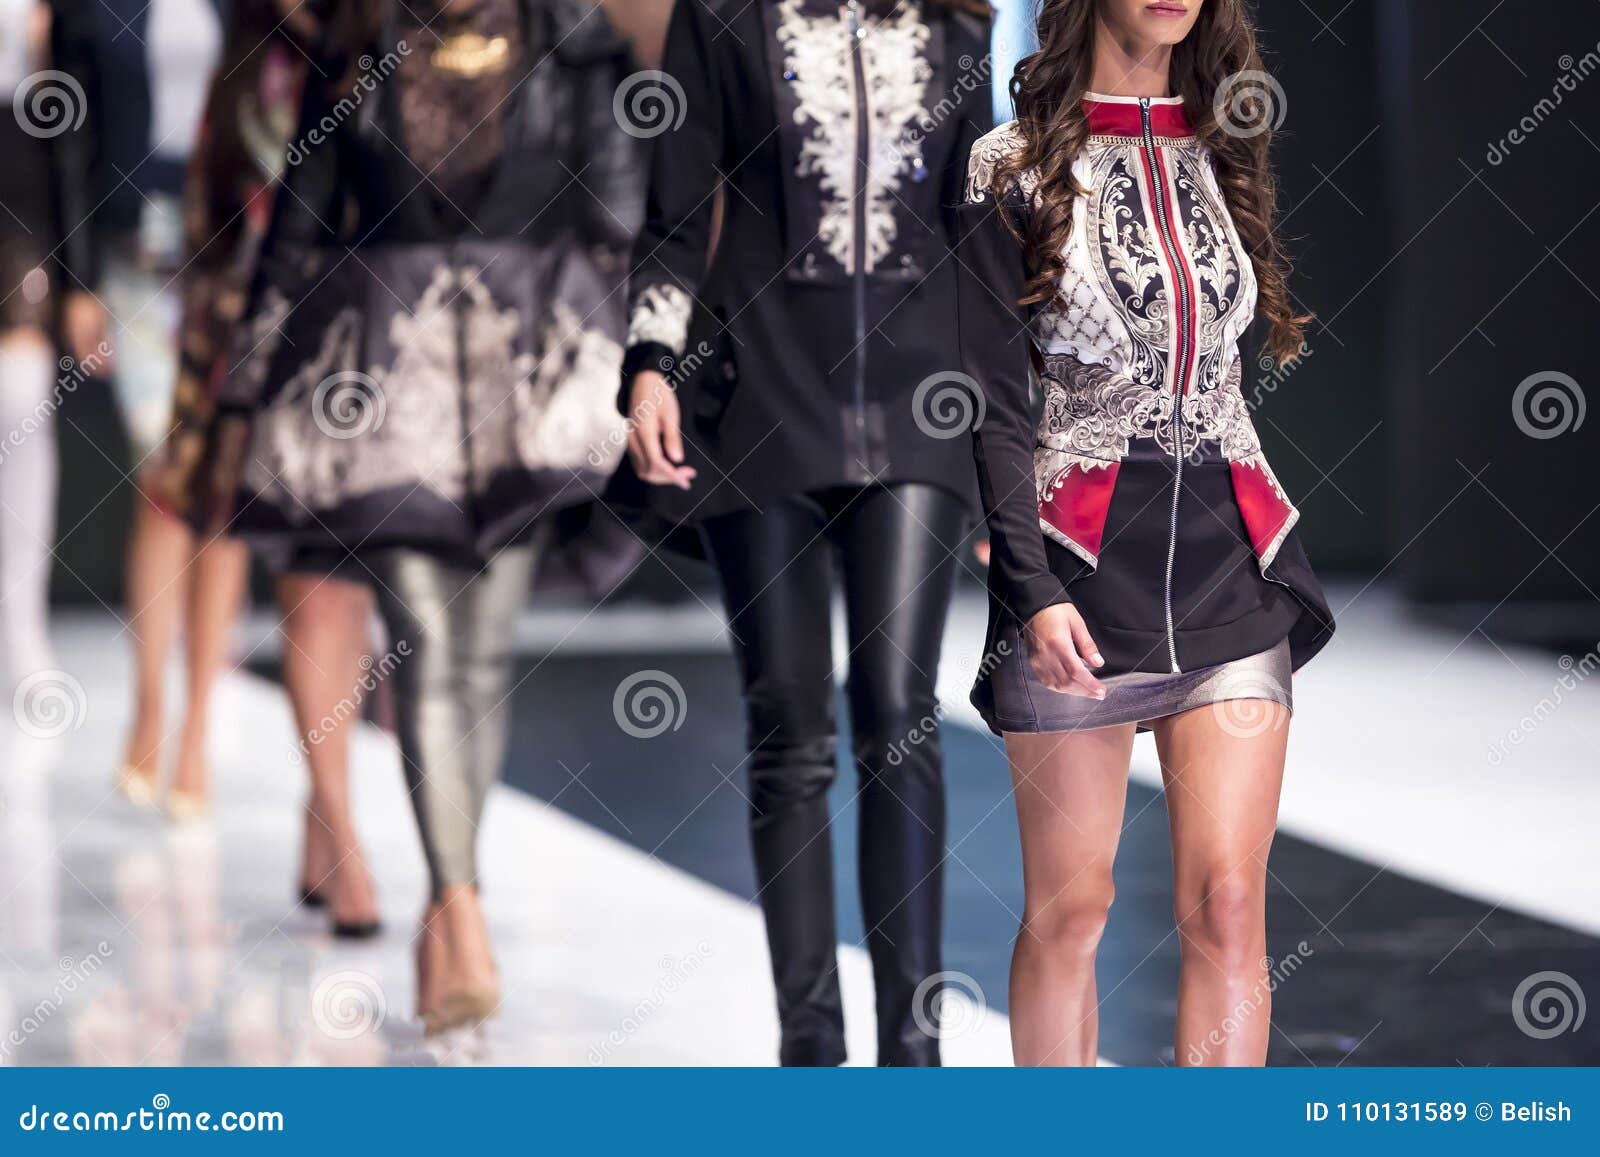 fashion catwalk runway show models